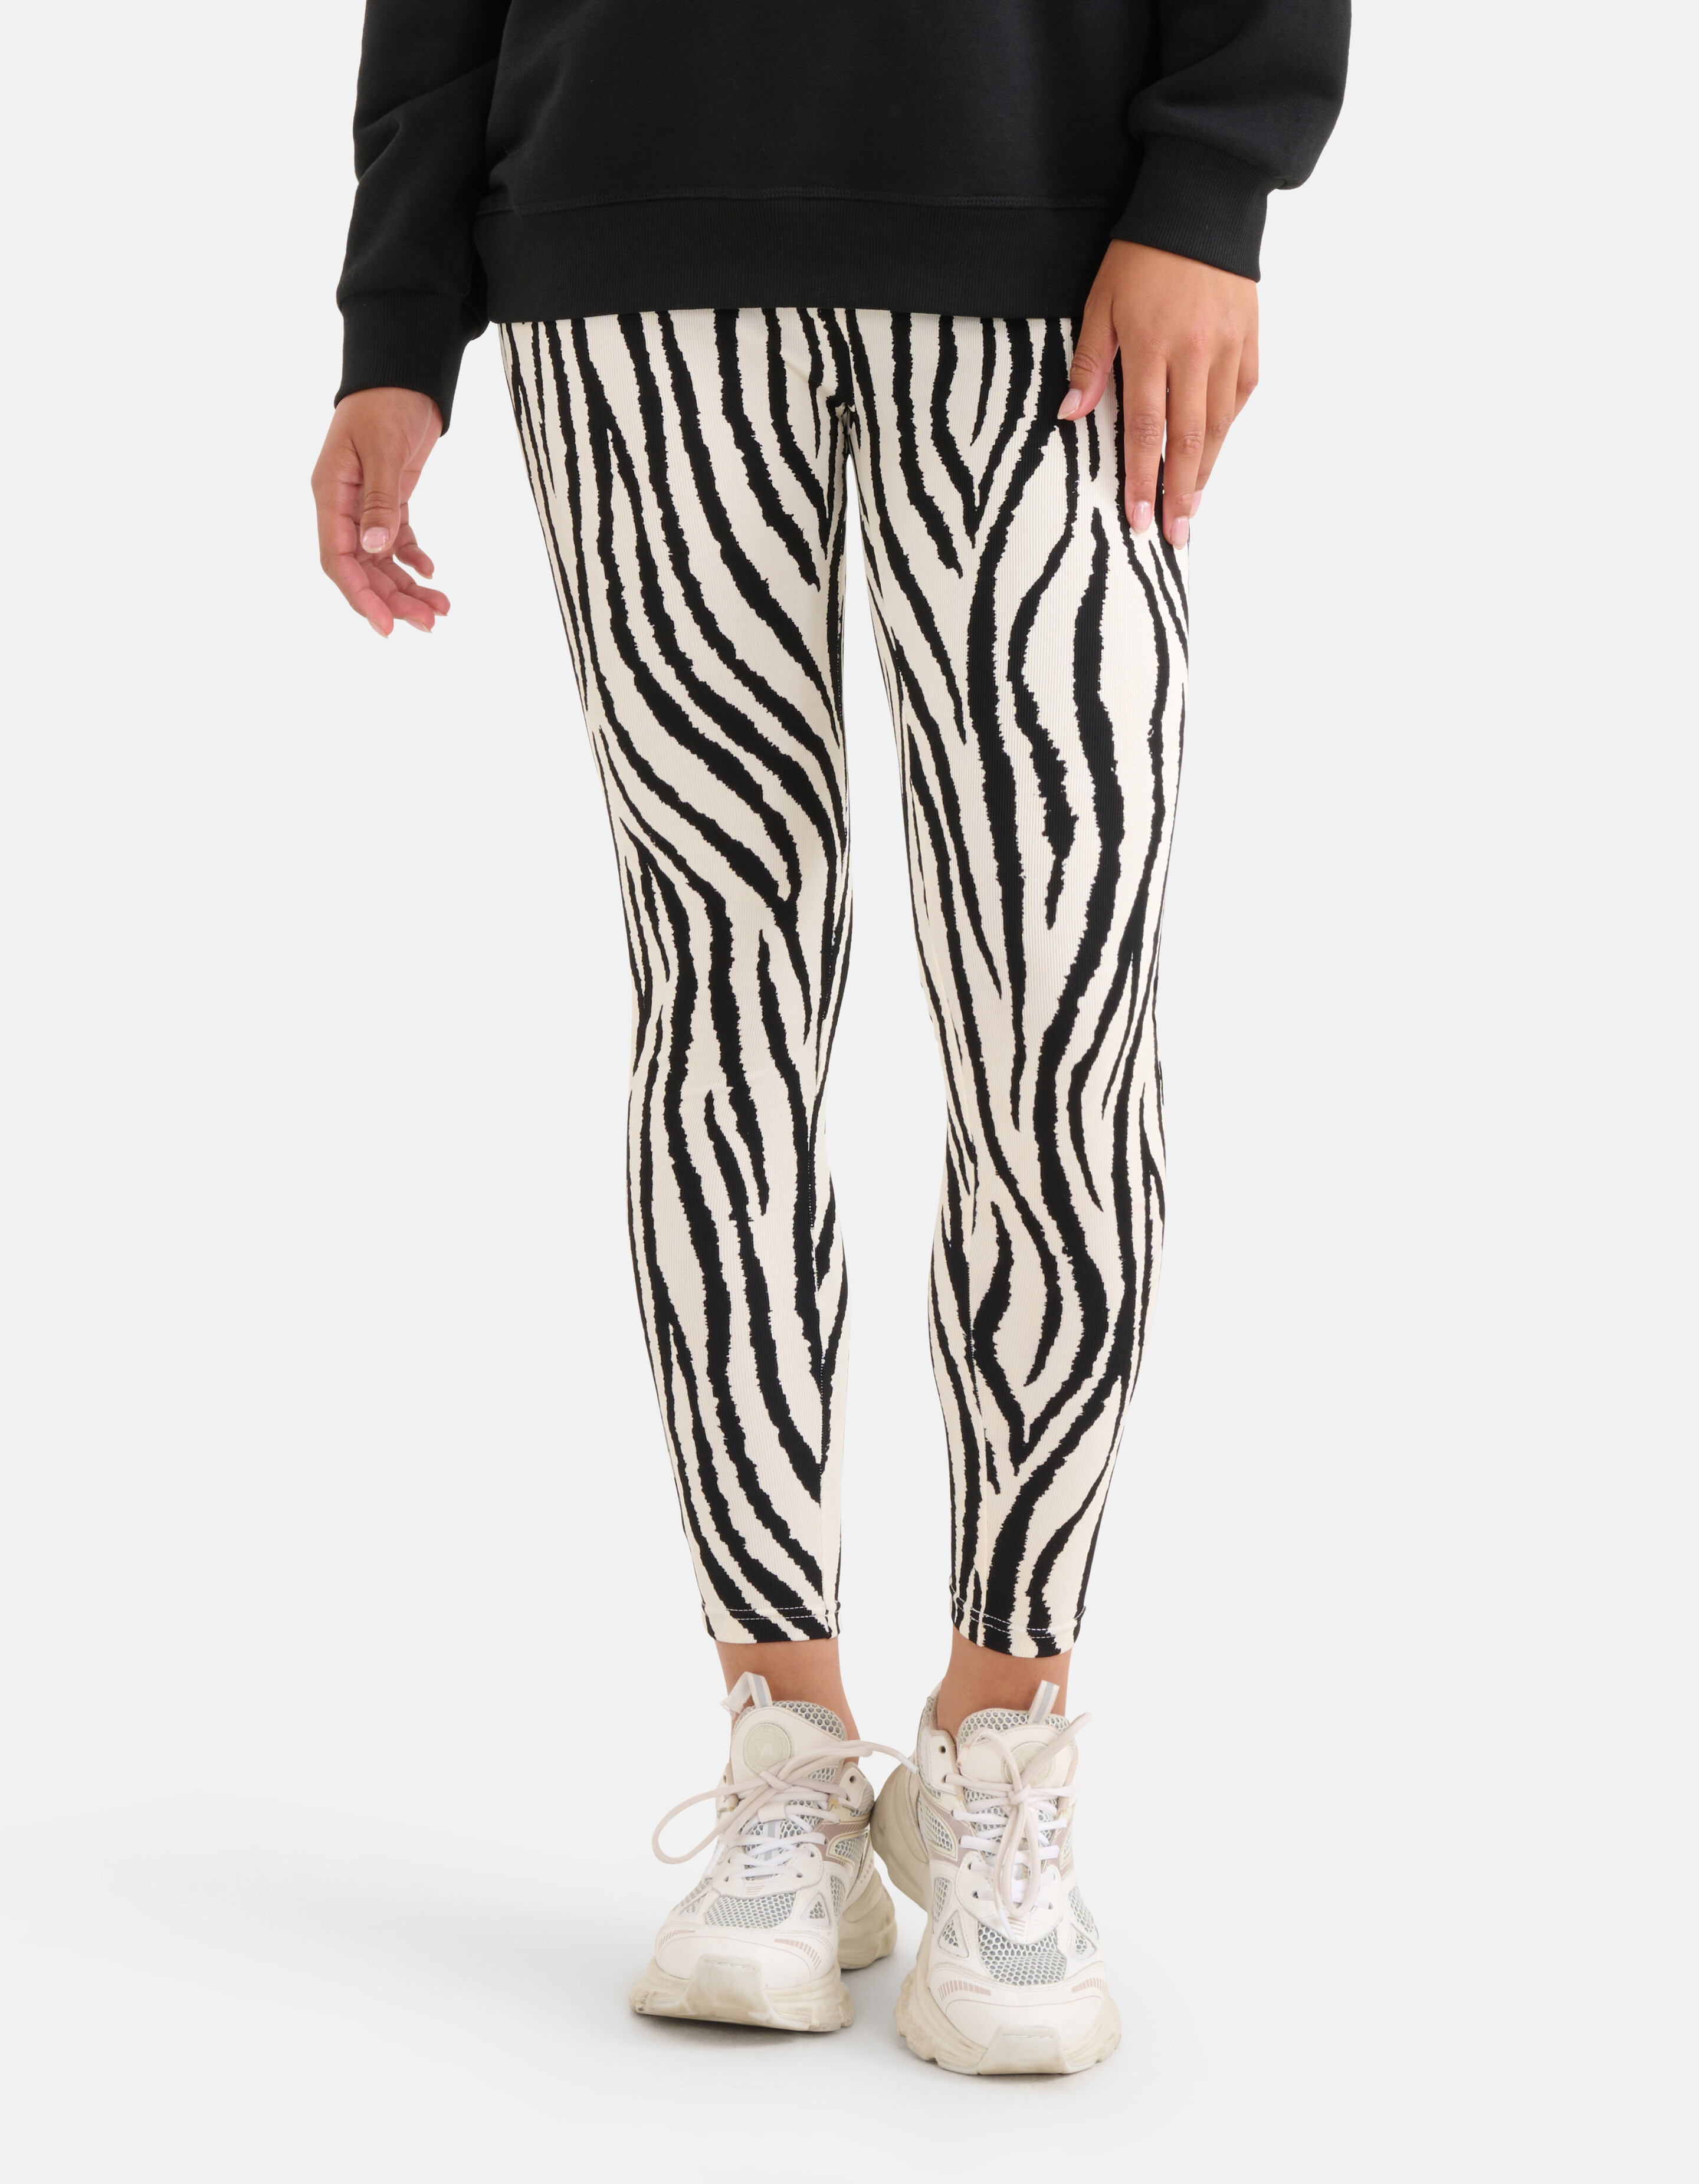 Zebra Print Legging Schwarz/Weiß SHOEBY WOMEN